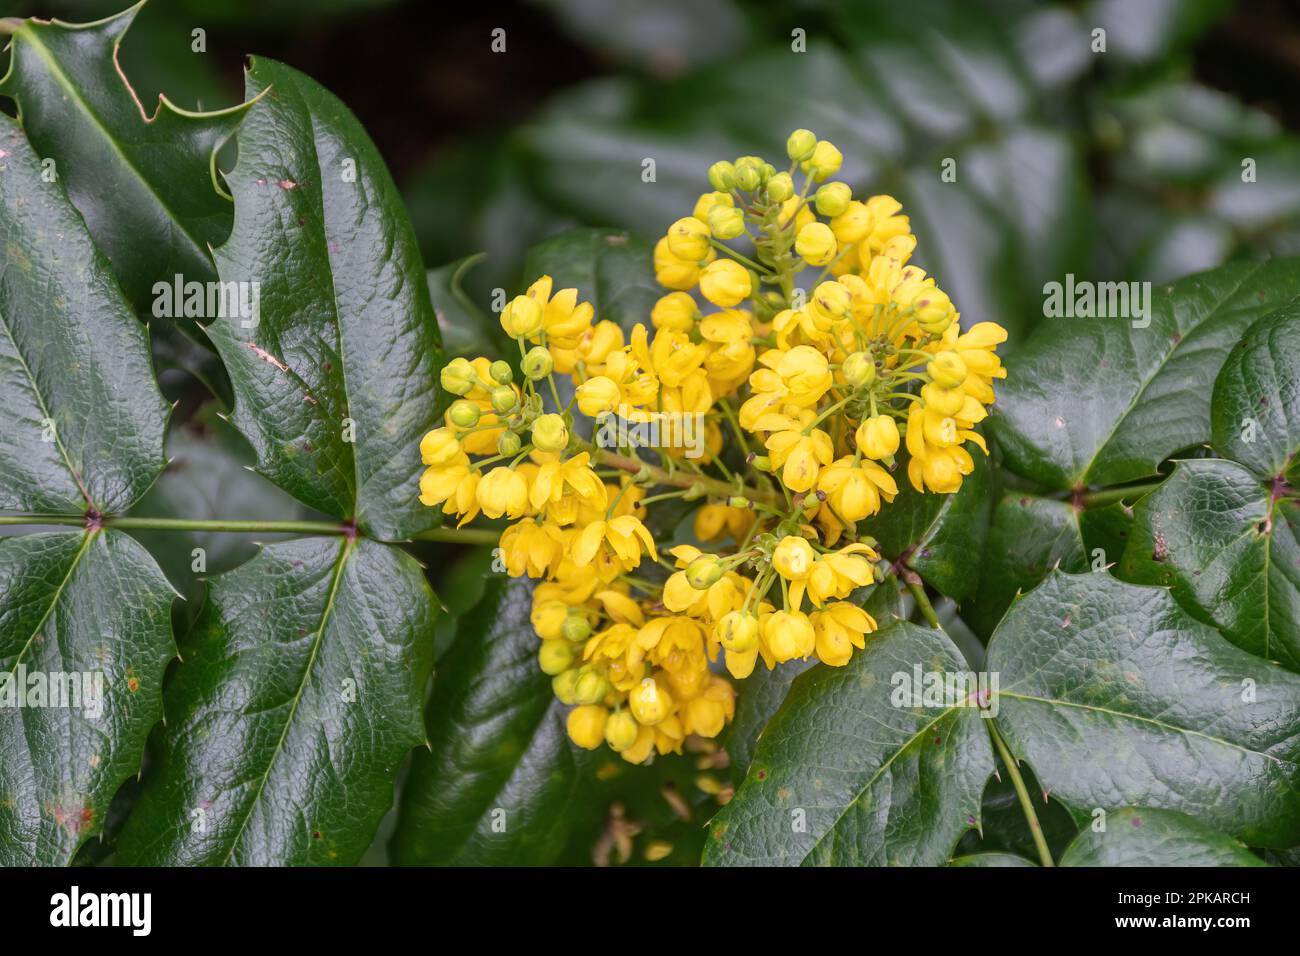 Cluster of yellow flowers on the evergreen shrub Mahonia aquifolium 'Smaragd' during Spring Stock Photo